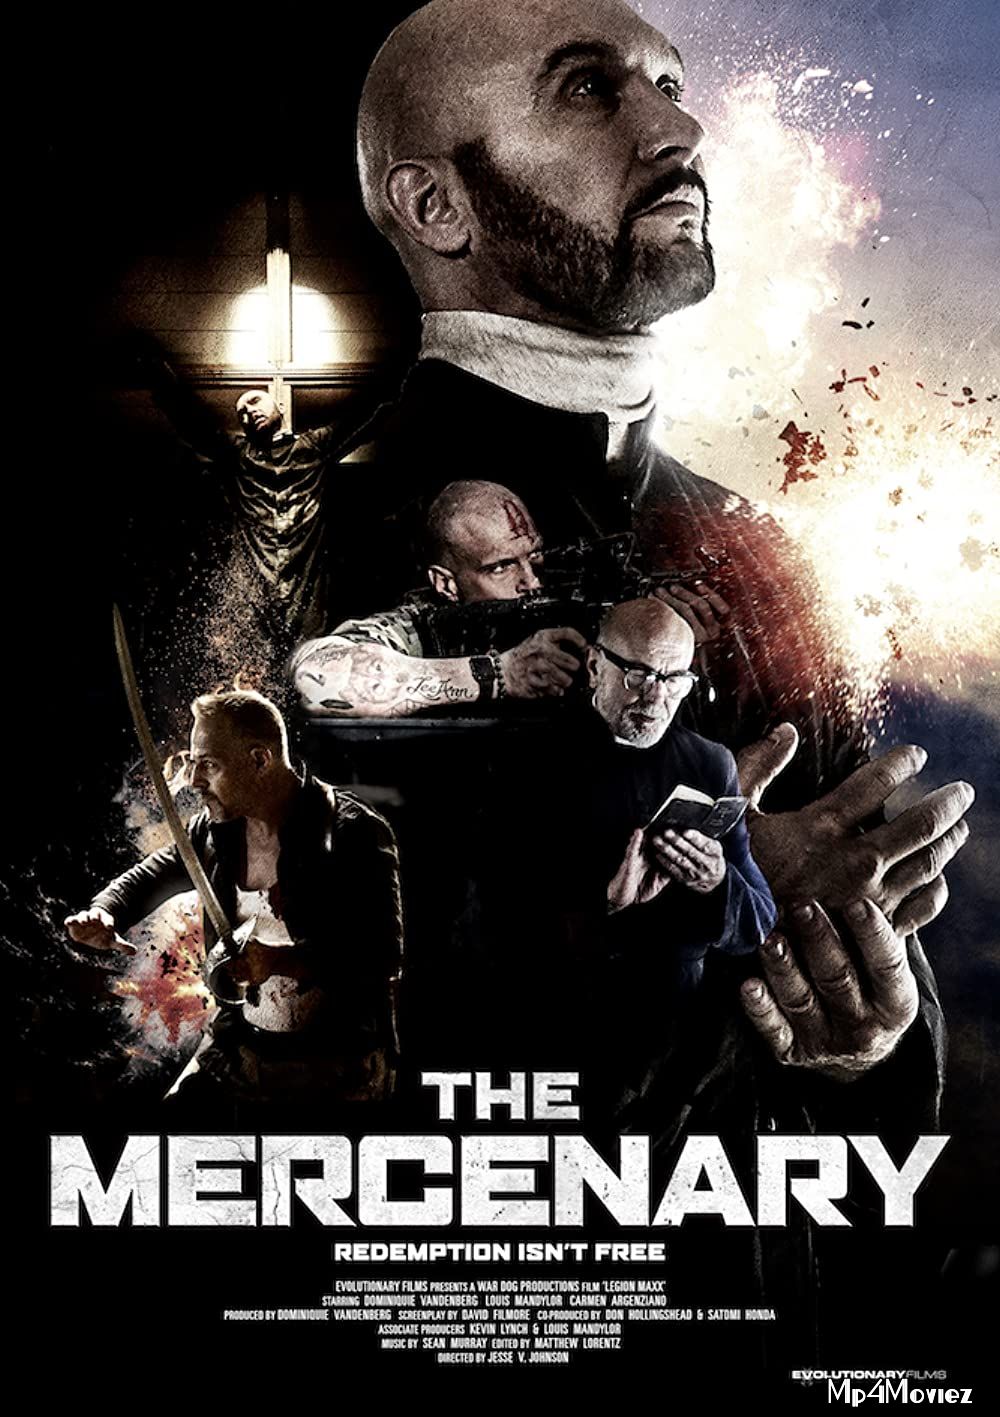 The Mercenary (2019) Hindi Dubbed BluRay download full movie